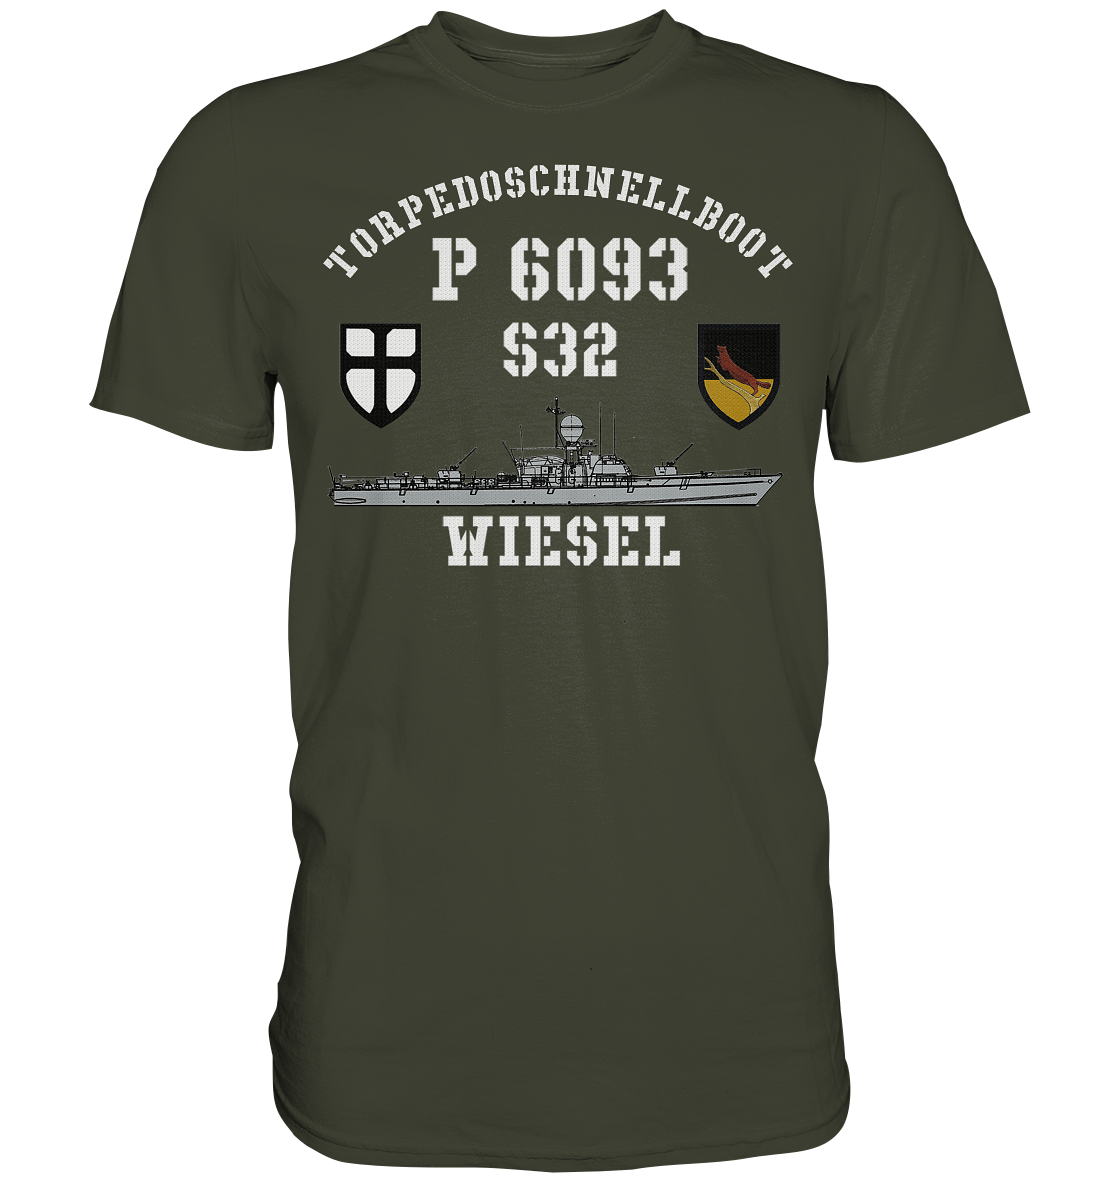 S32 WIESEL - Premium Shirt